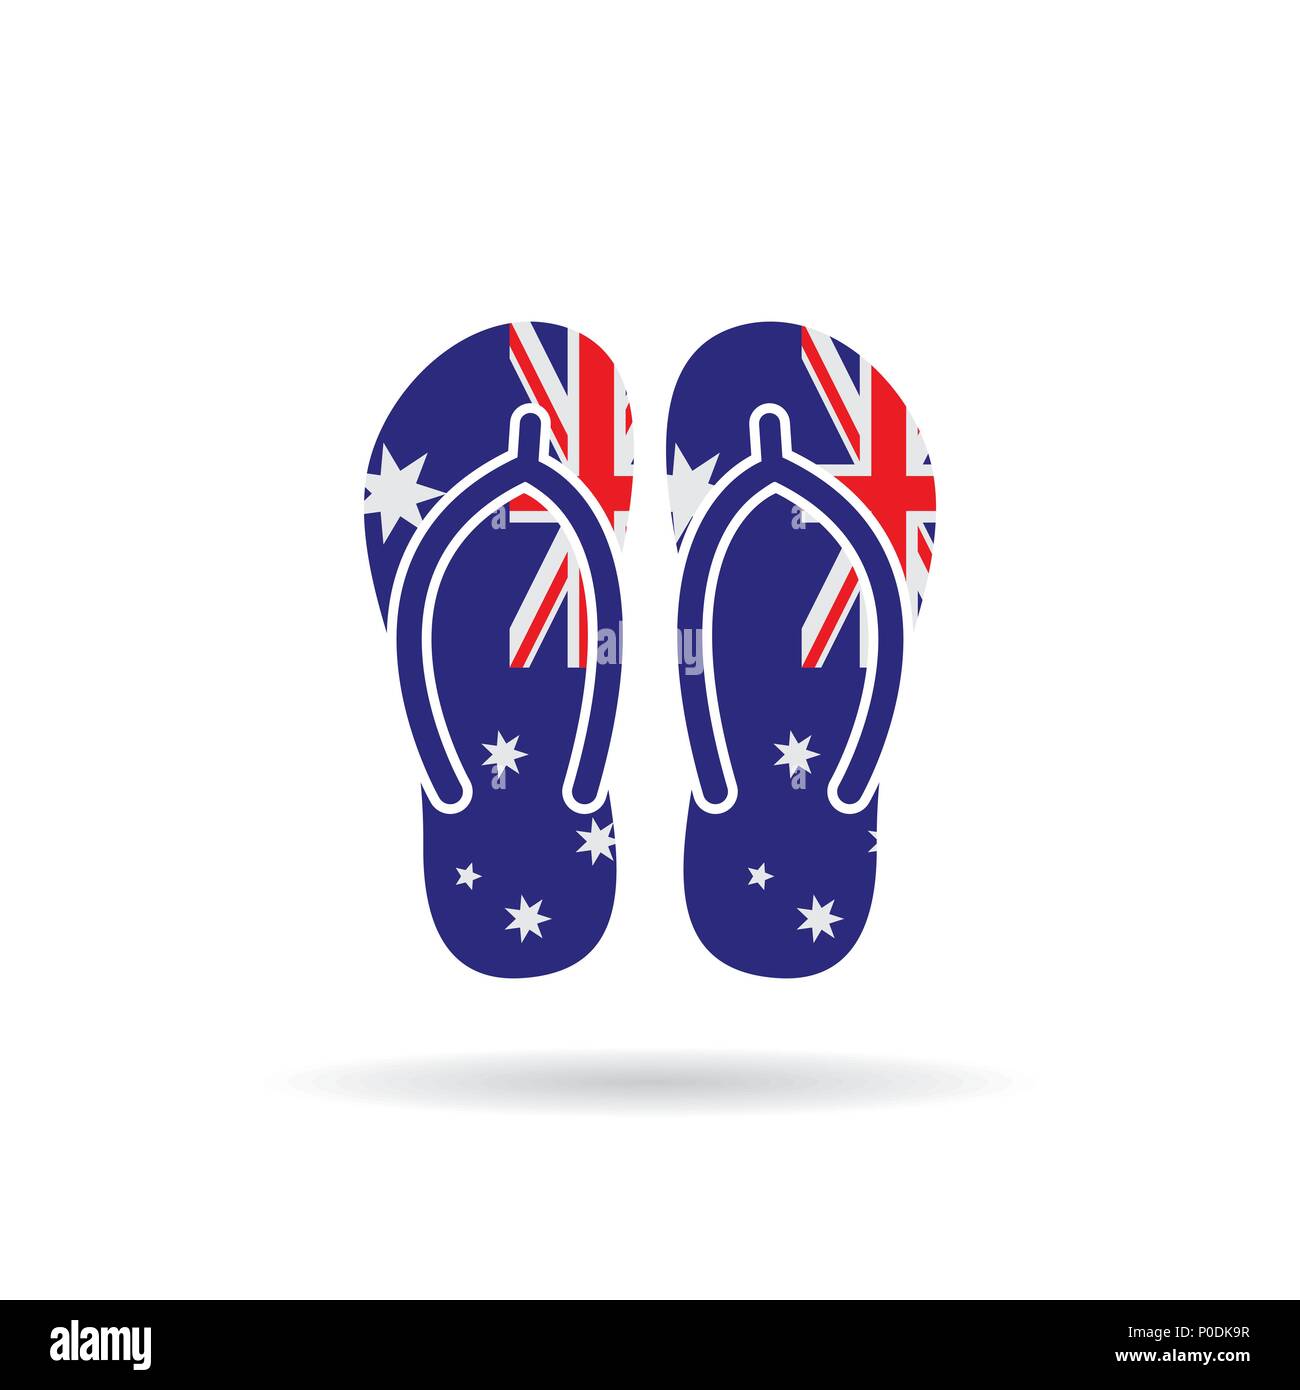 https://c8.alamy.com/comp/P0DK9R/australia-flag-flip-flop-sandals-icon-on-a-white-background-P0DK9R.jpg